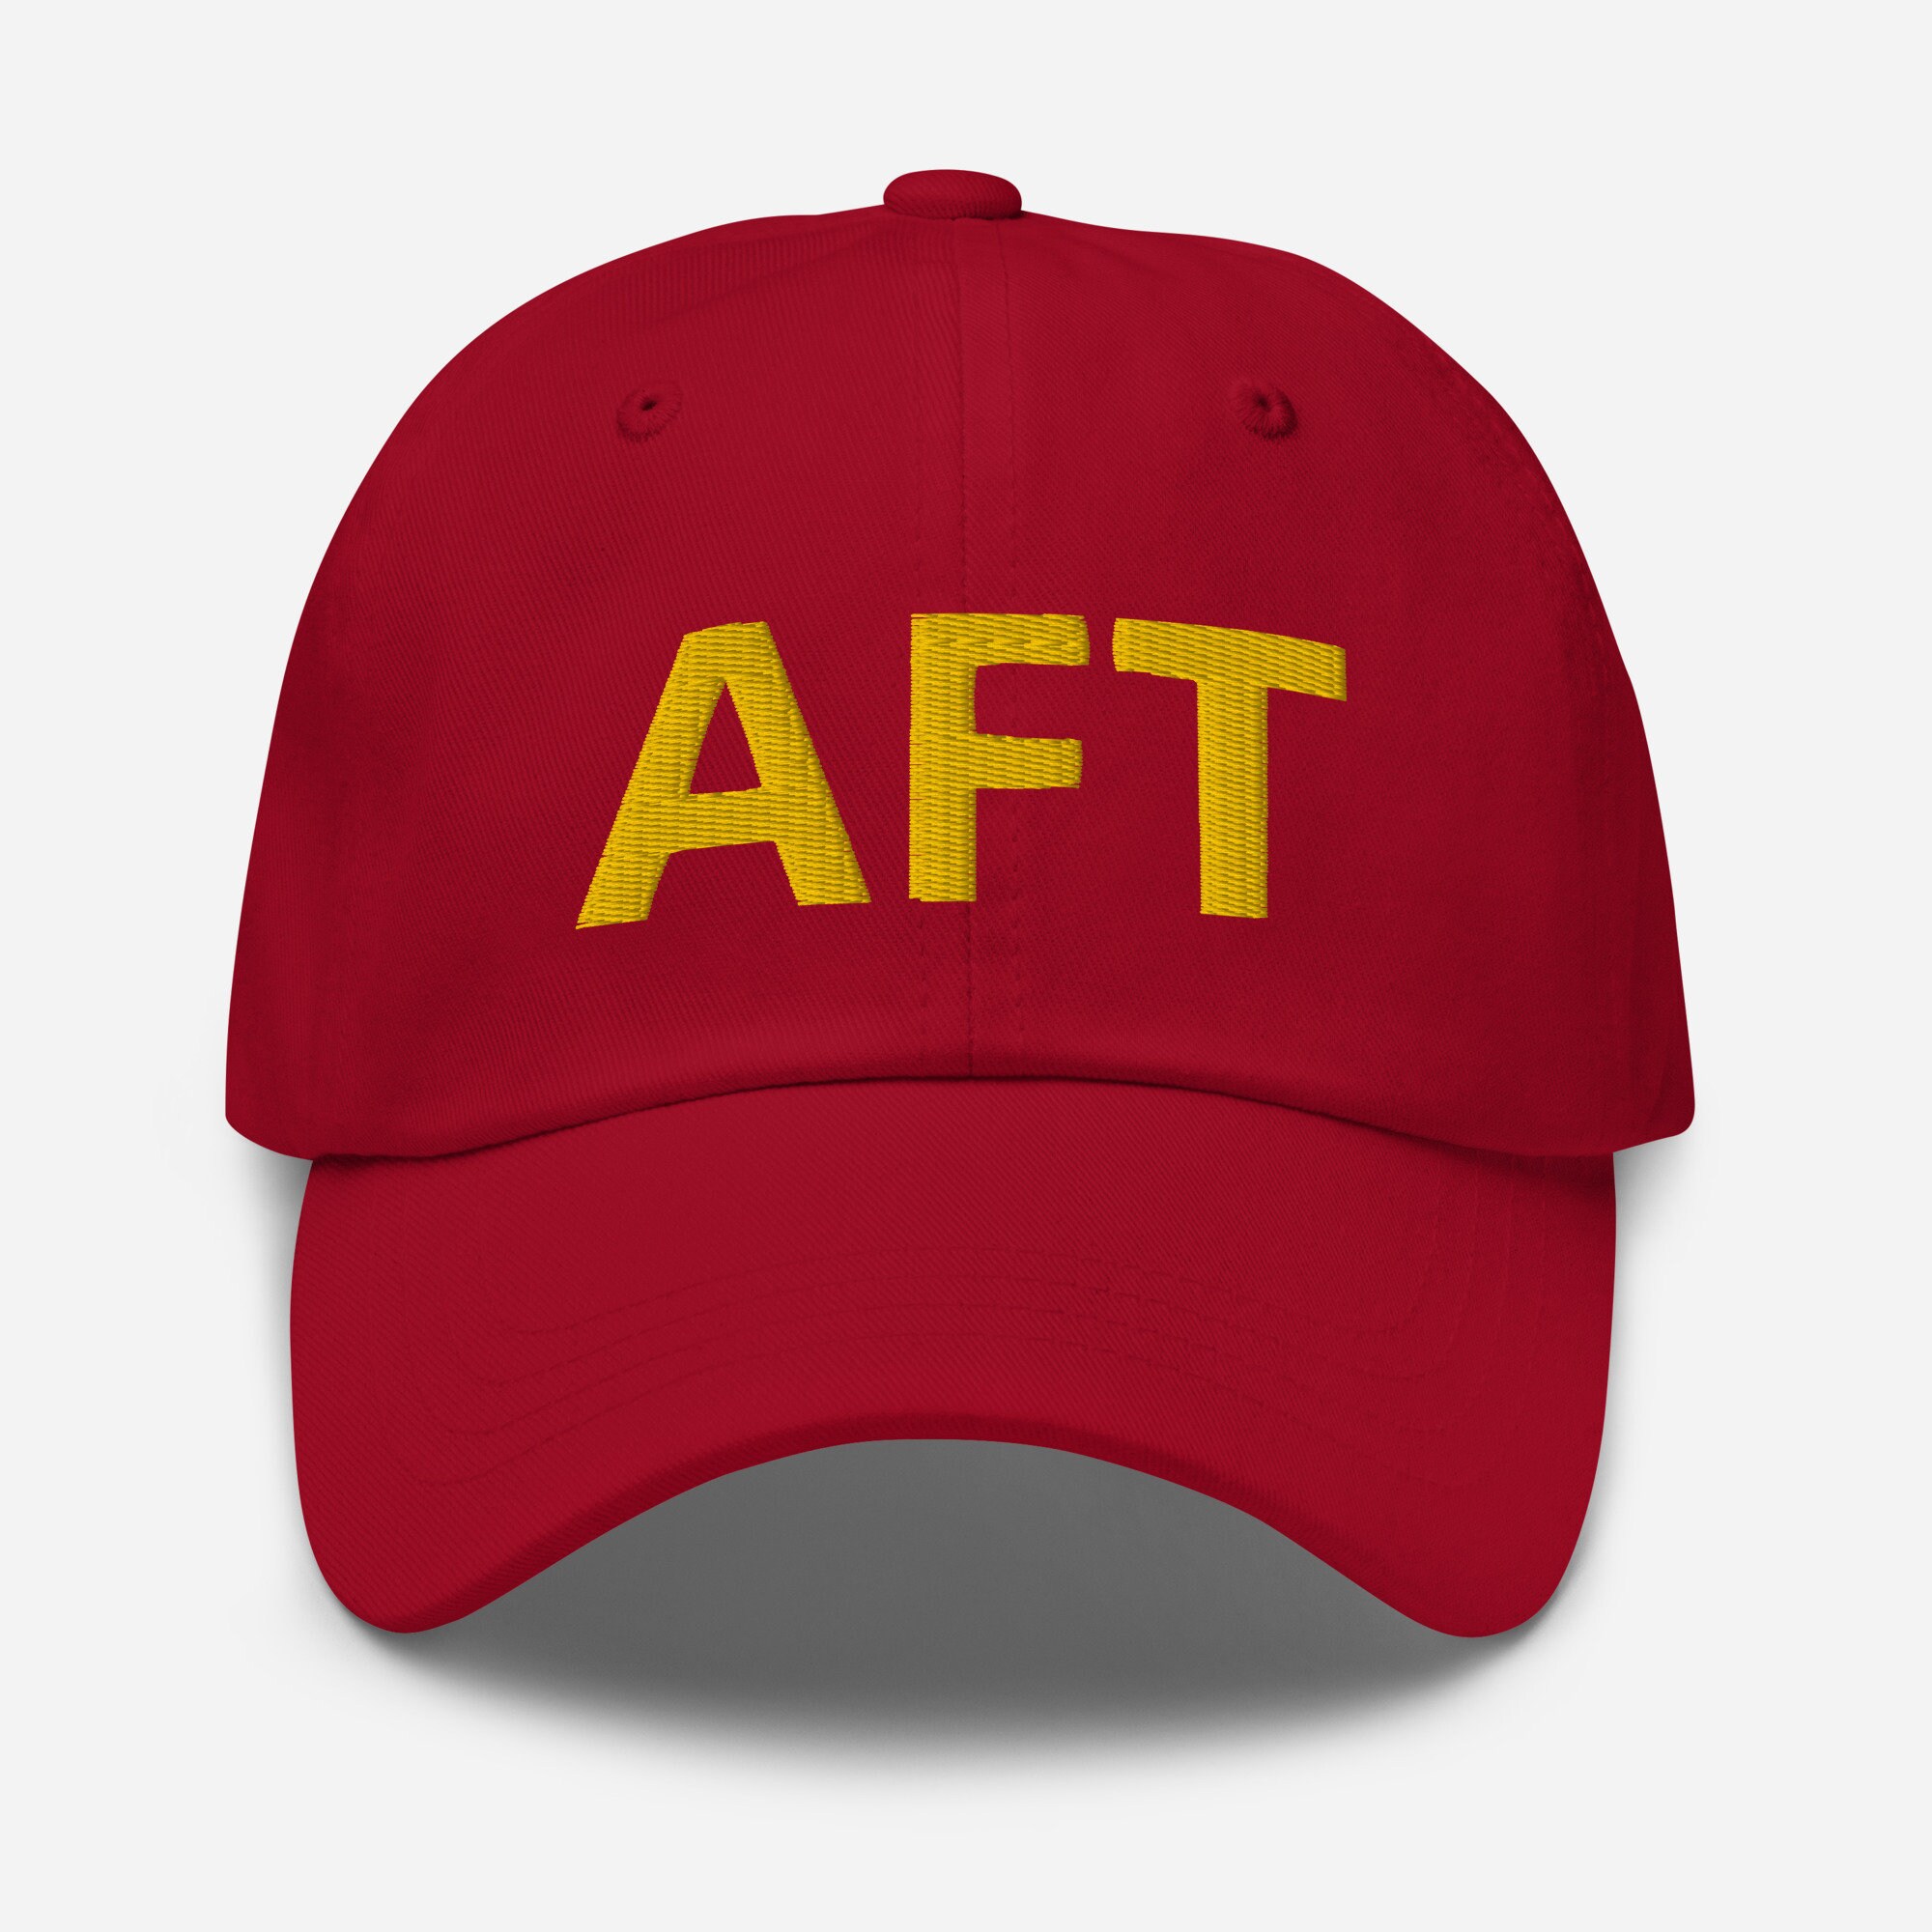 AFT Hat, AFT Cap, AFT Gift, American Federation of Teachers, Teacher Hat,  Worker's Union Hat, Union Gifts, Teacher Gifts, Education Hat 